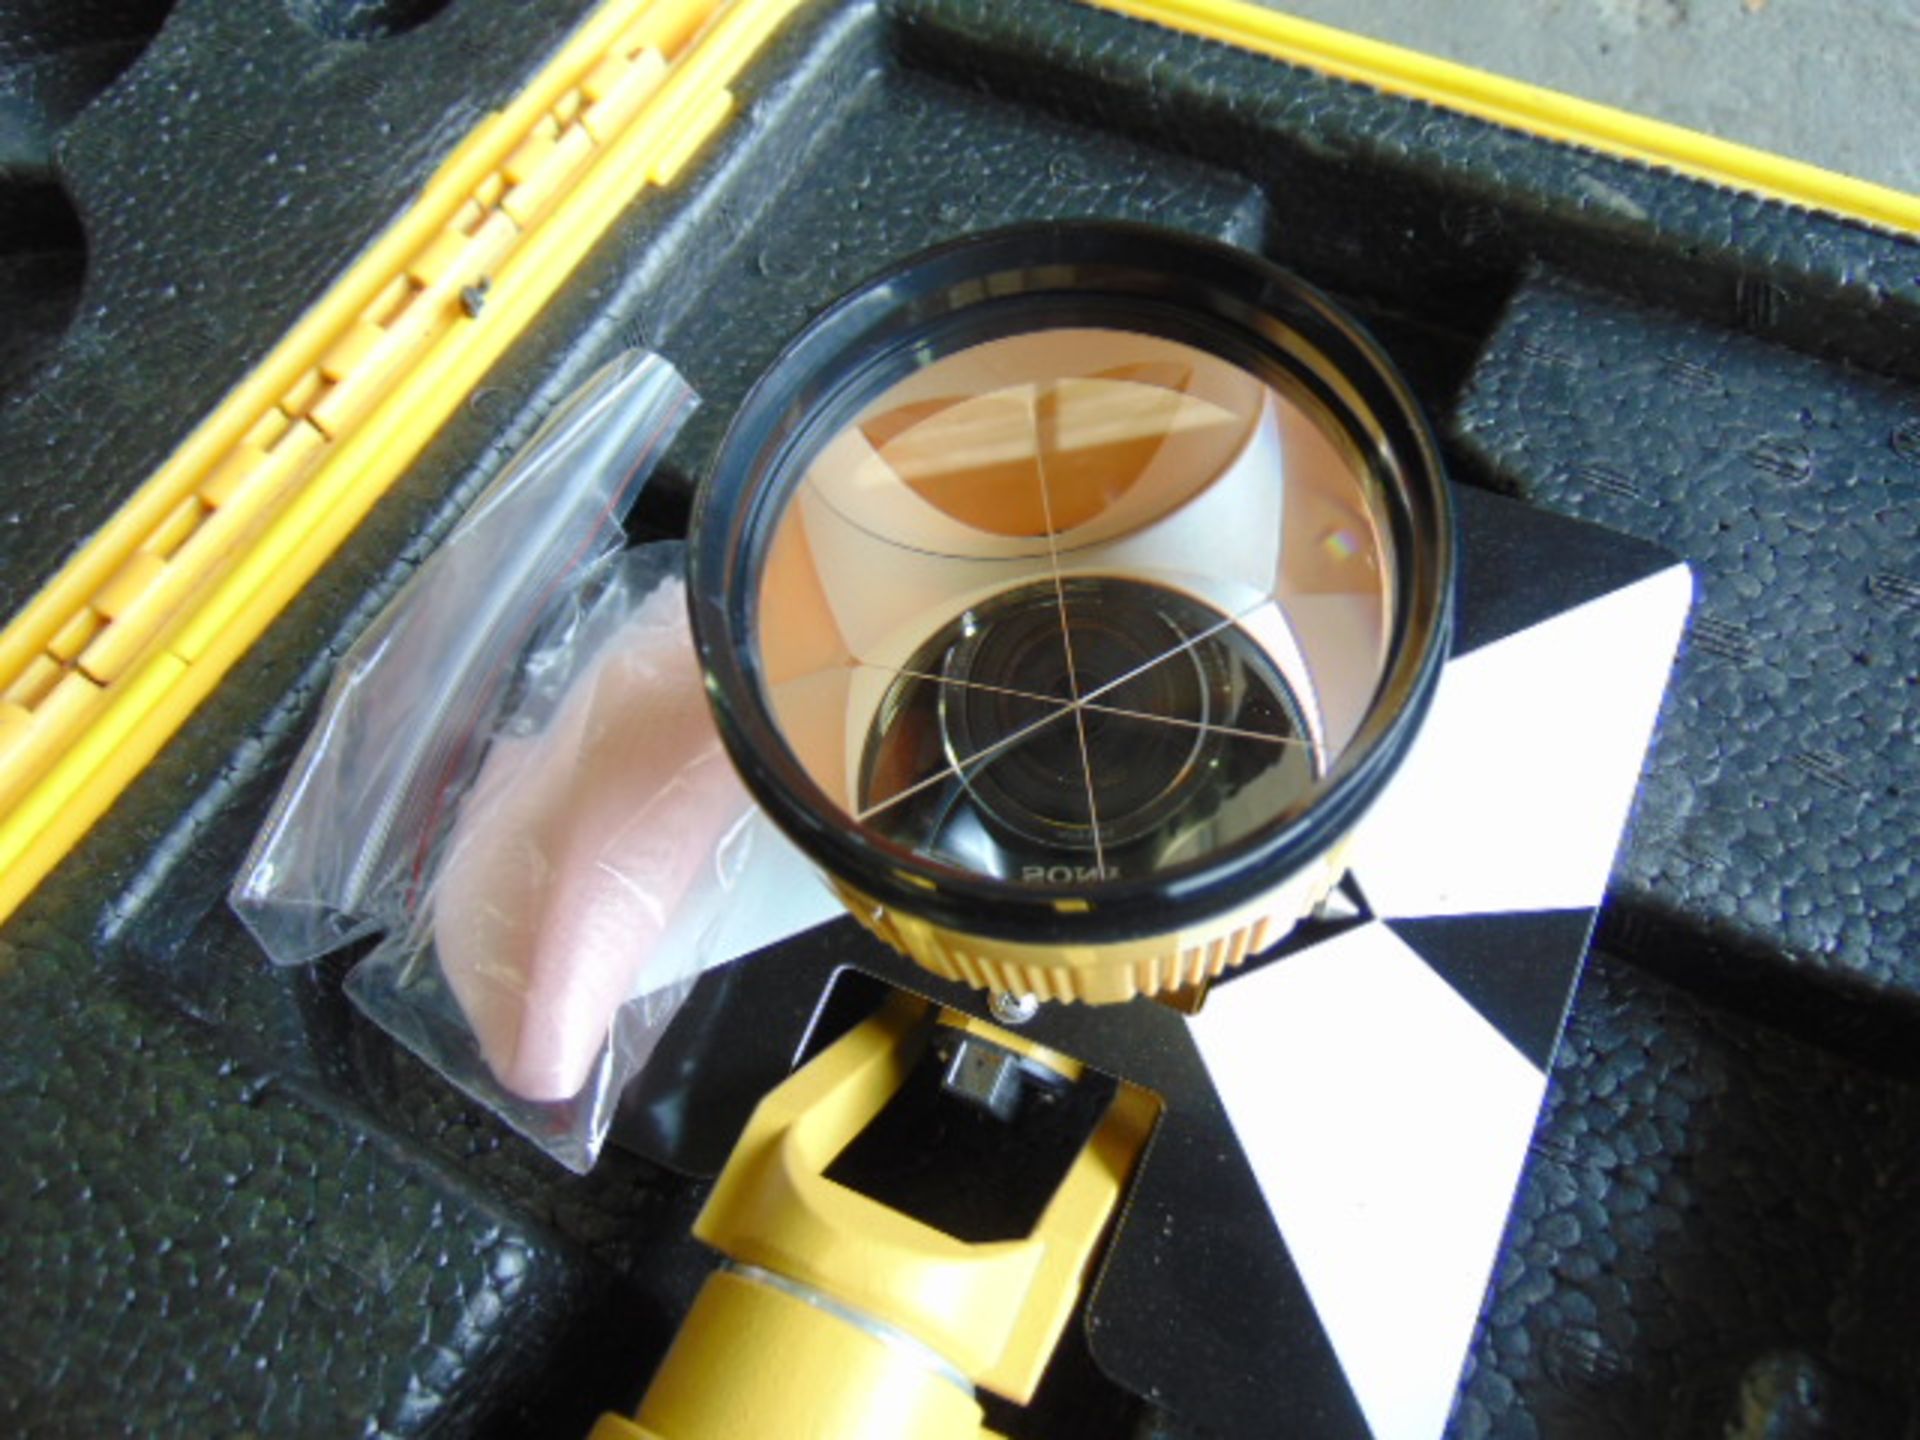 Surveyors Theodolite Reflector equipment c/w Transit Case - Image 3 of 7